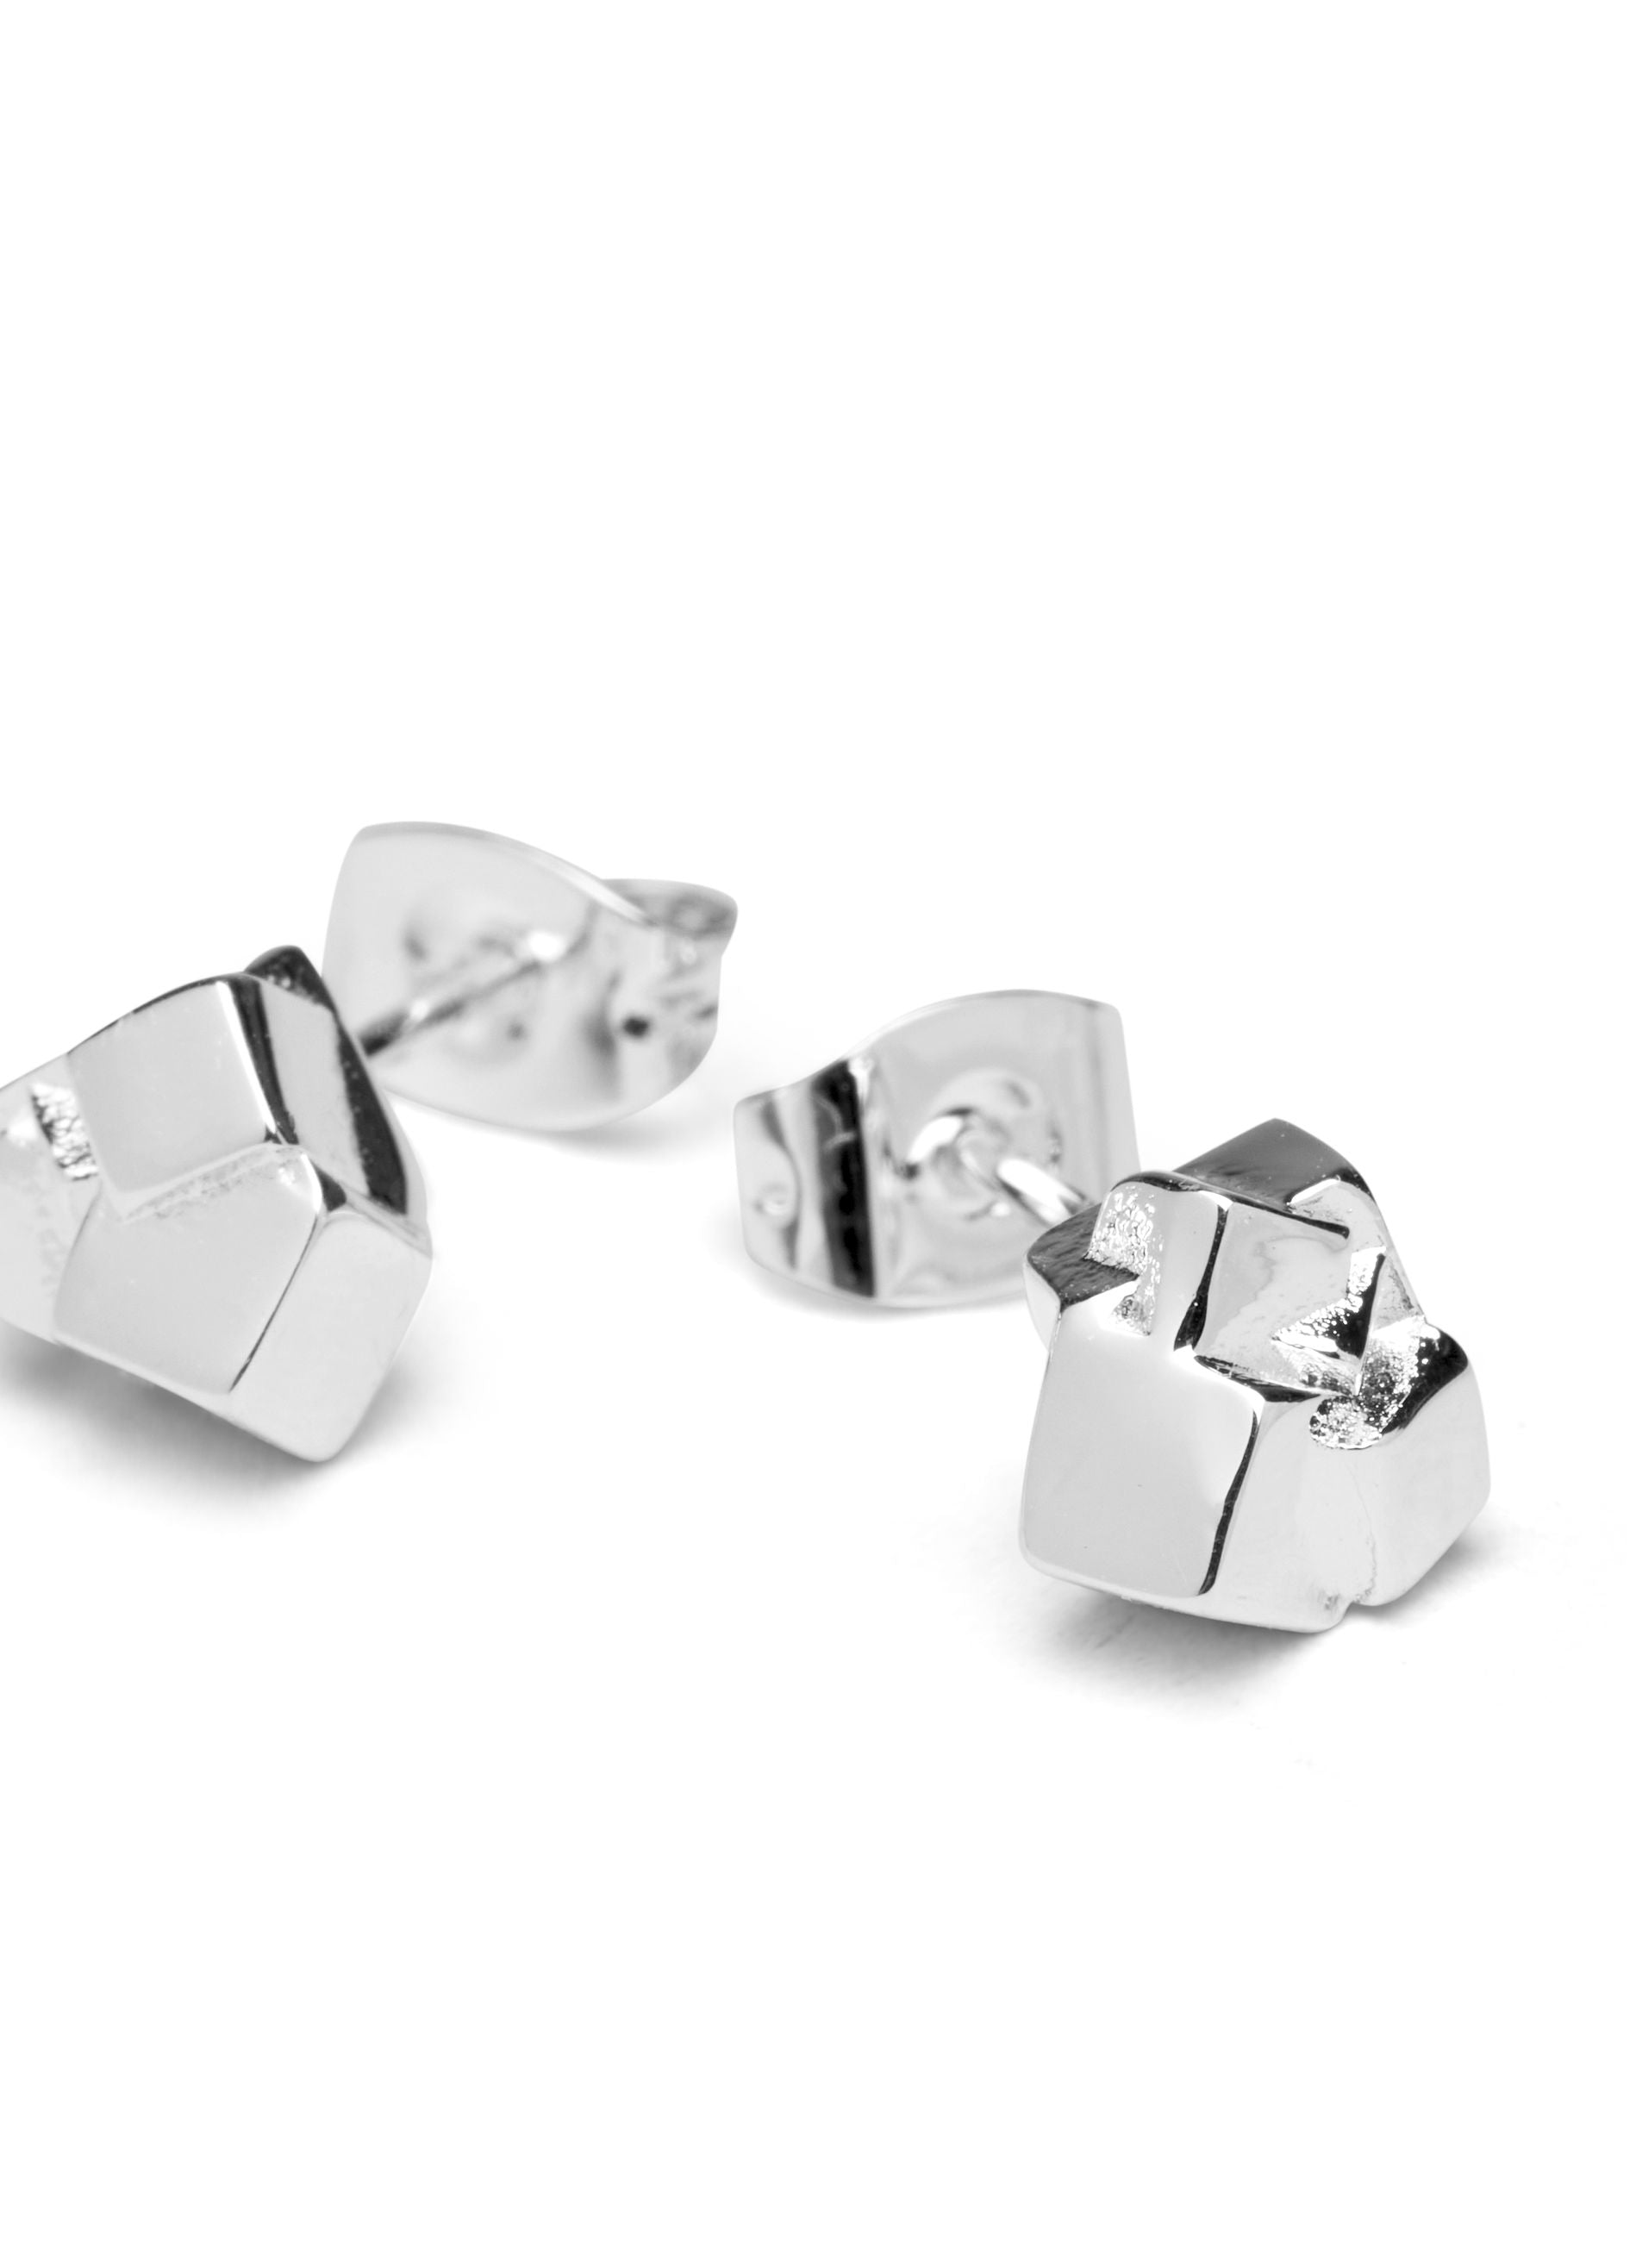 Skultuna Morph Mini Earrings, Silver Plated